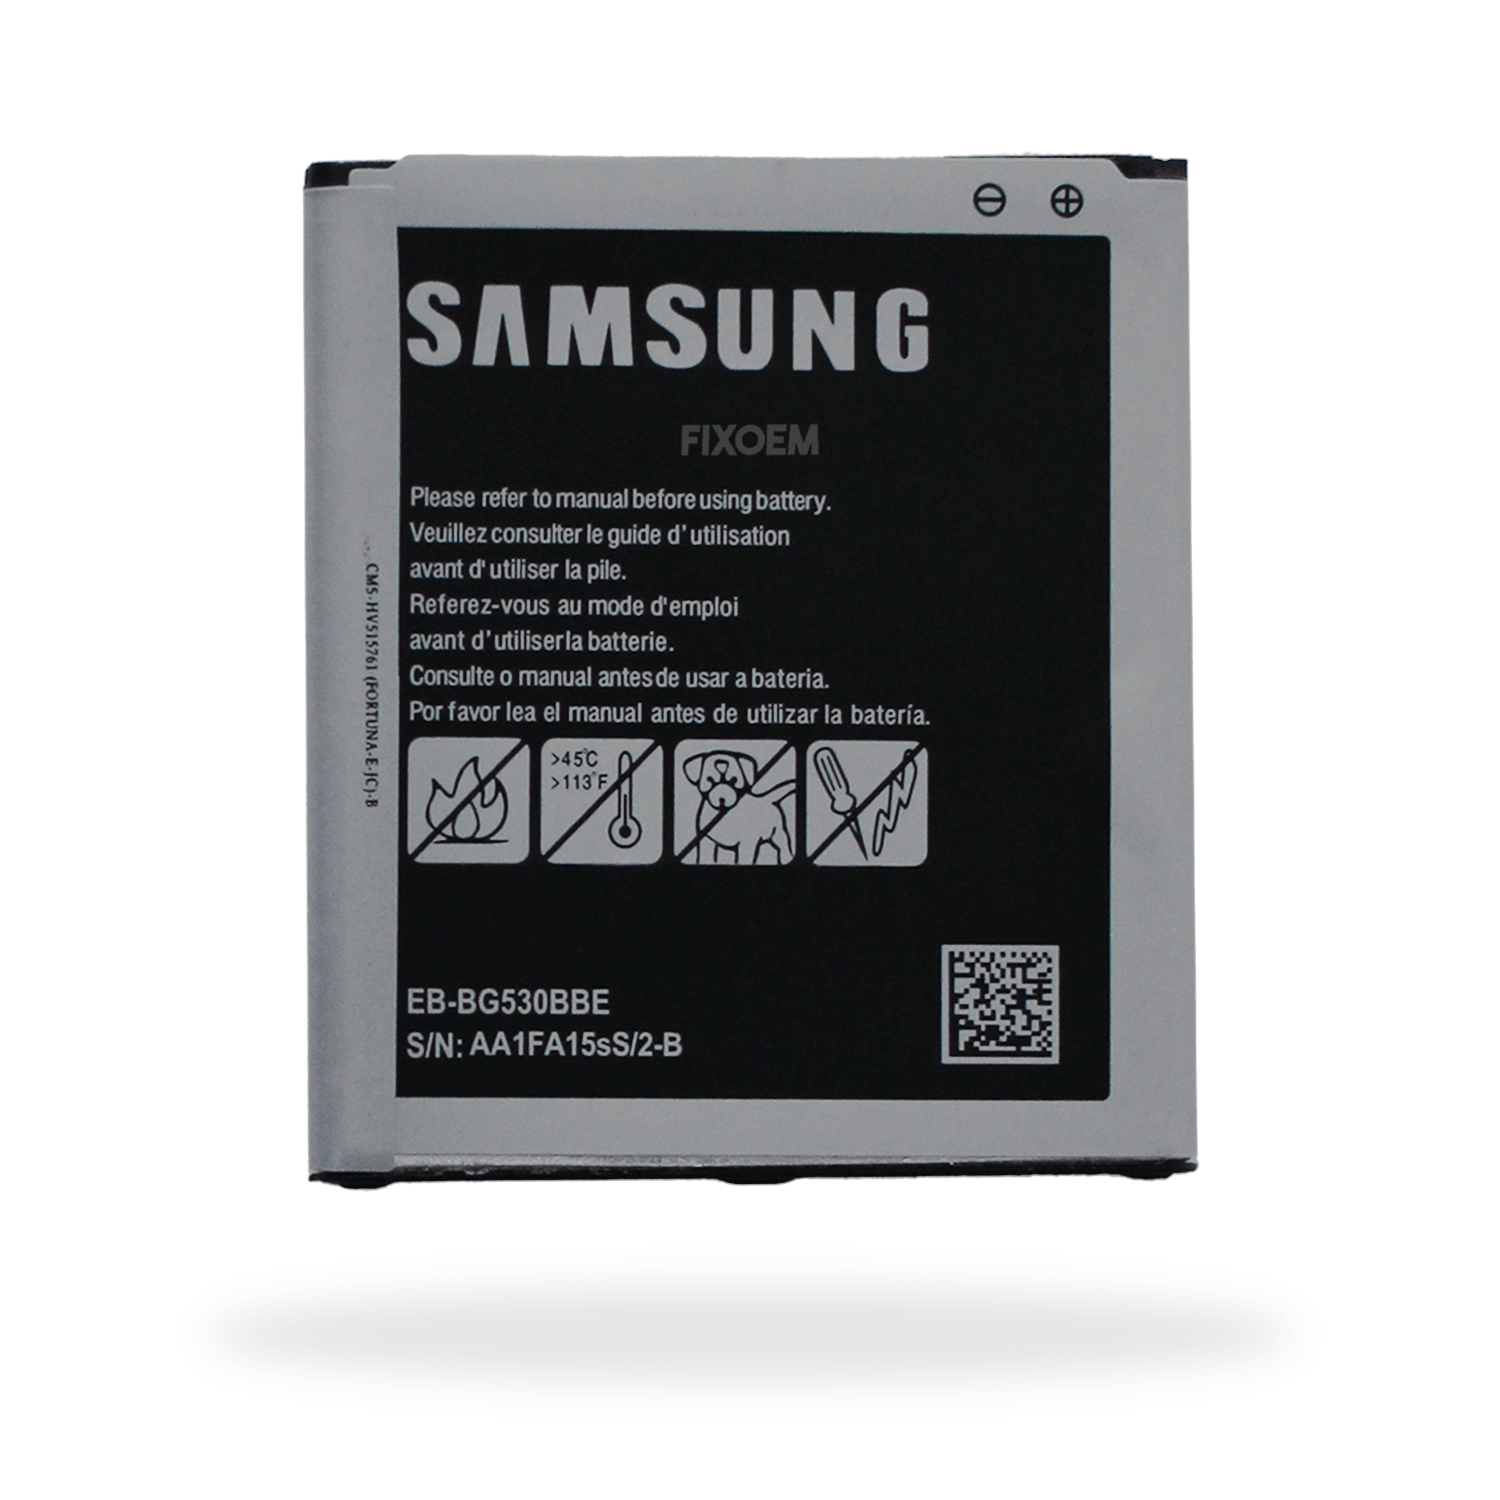 Bateria Samsung Grand Prime /J5 /S4 Sm-G530 Sm-J500M Eb-Bg530Cbe a solo $ 110.00 Refaccion y puestos celulares, refurbish y microelectronica.- FixOEM